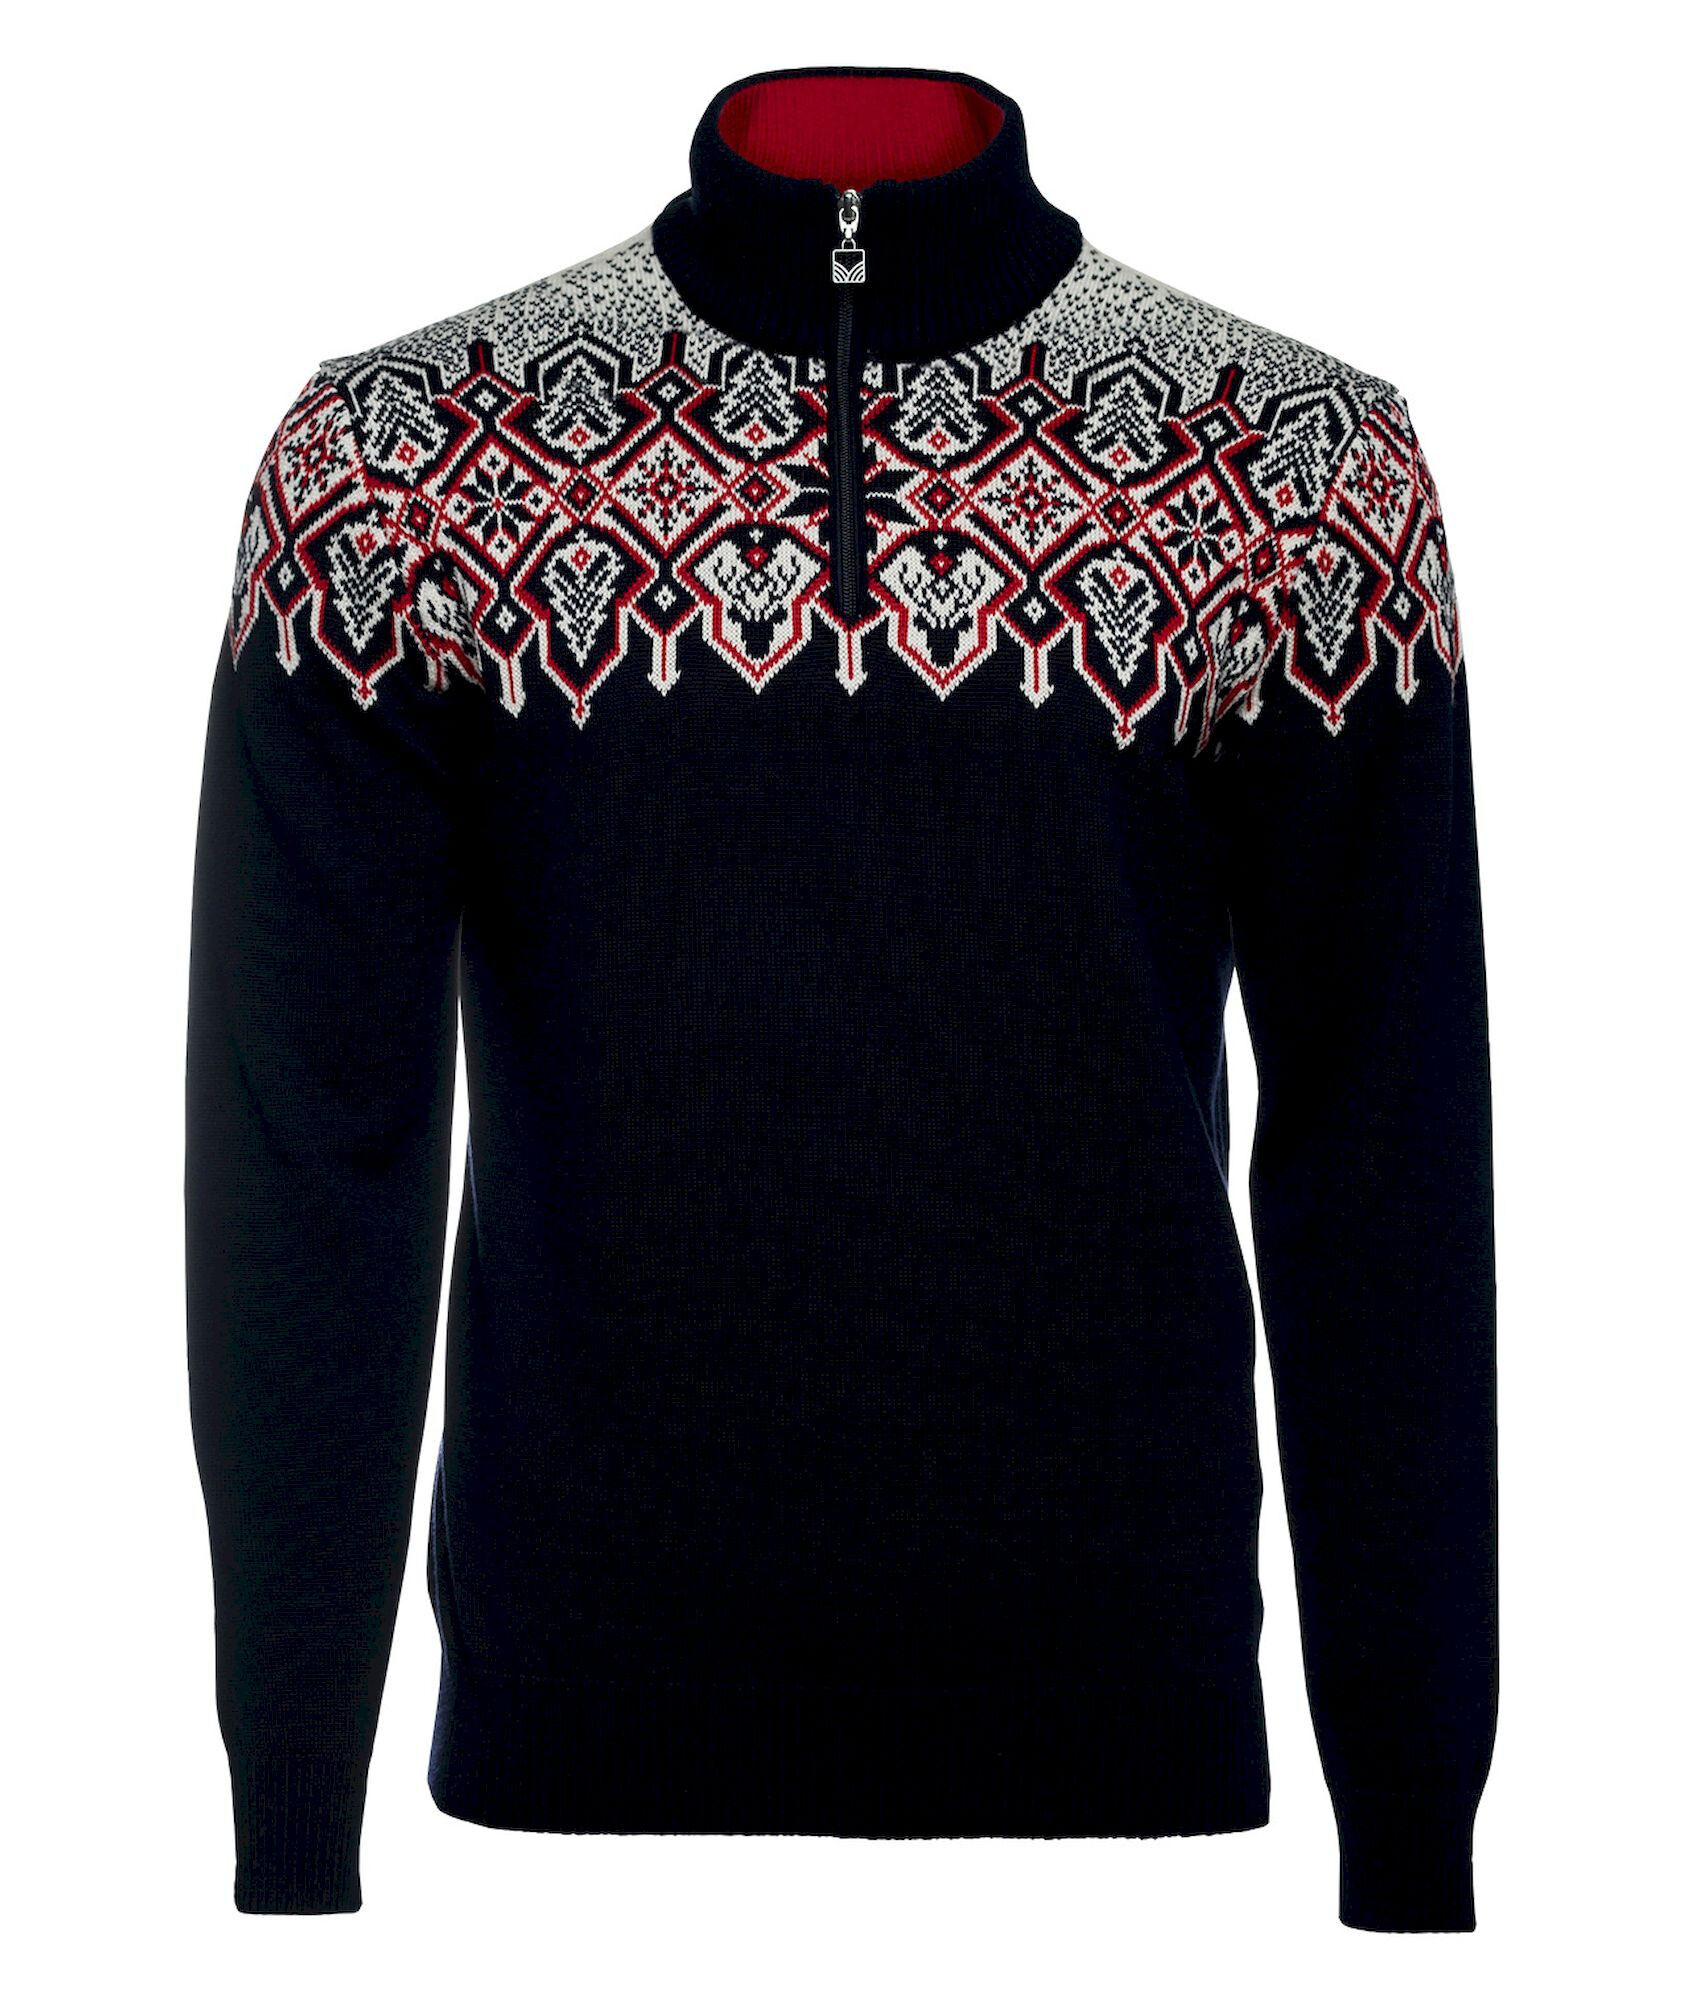 Dale of Norway Winterland Sweater - Pullover in lana merino - Uomo | Hardloop